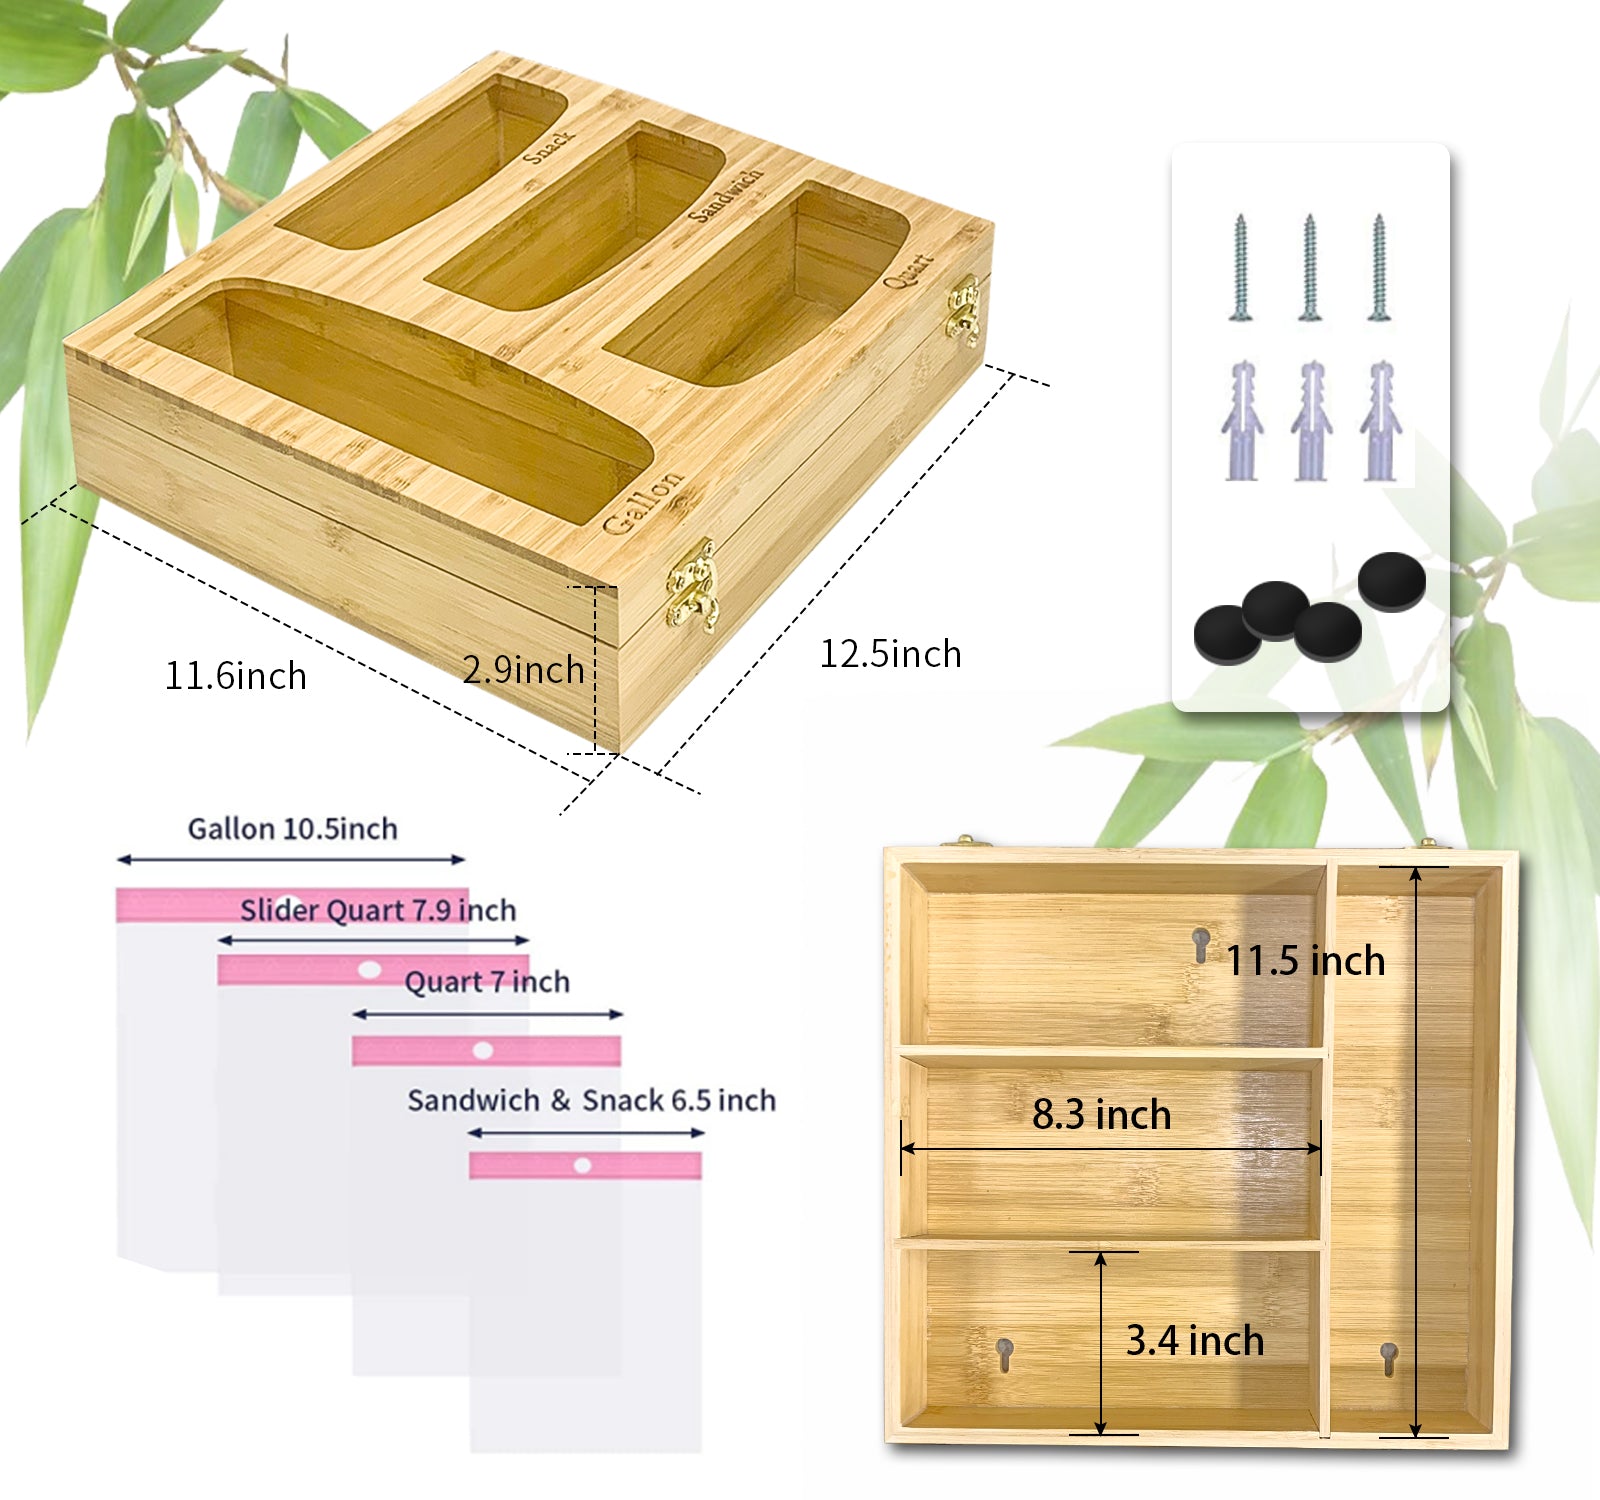 Bamboo Ziplock Bag Storage Kitchen Drawer Organizer